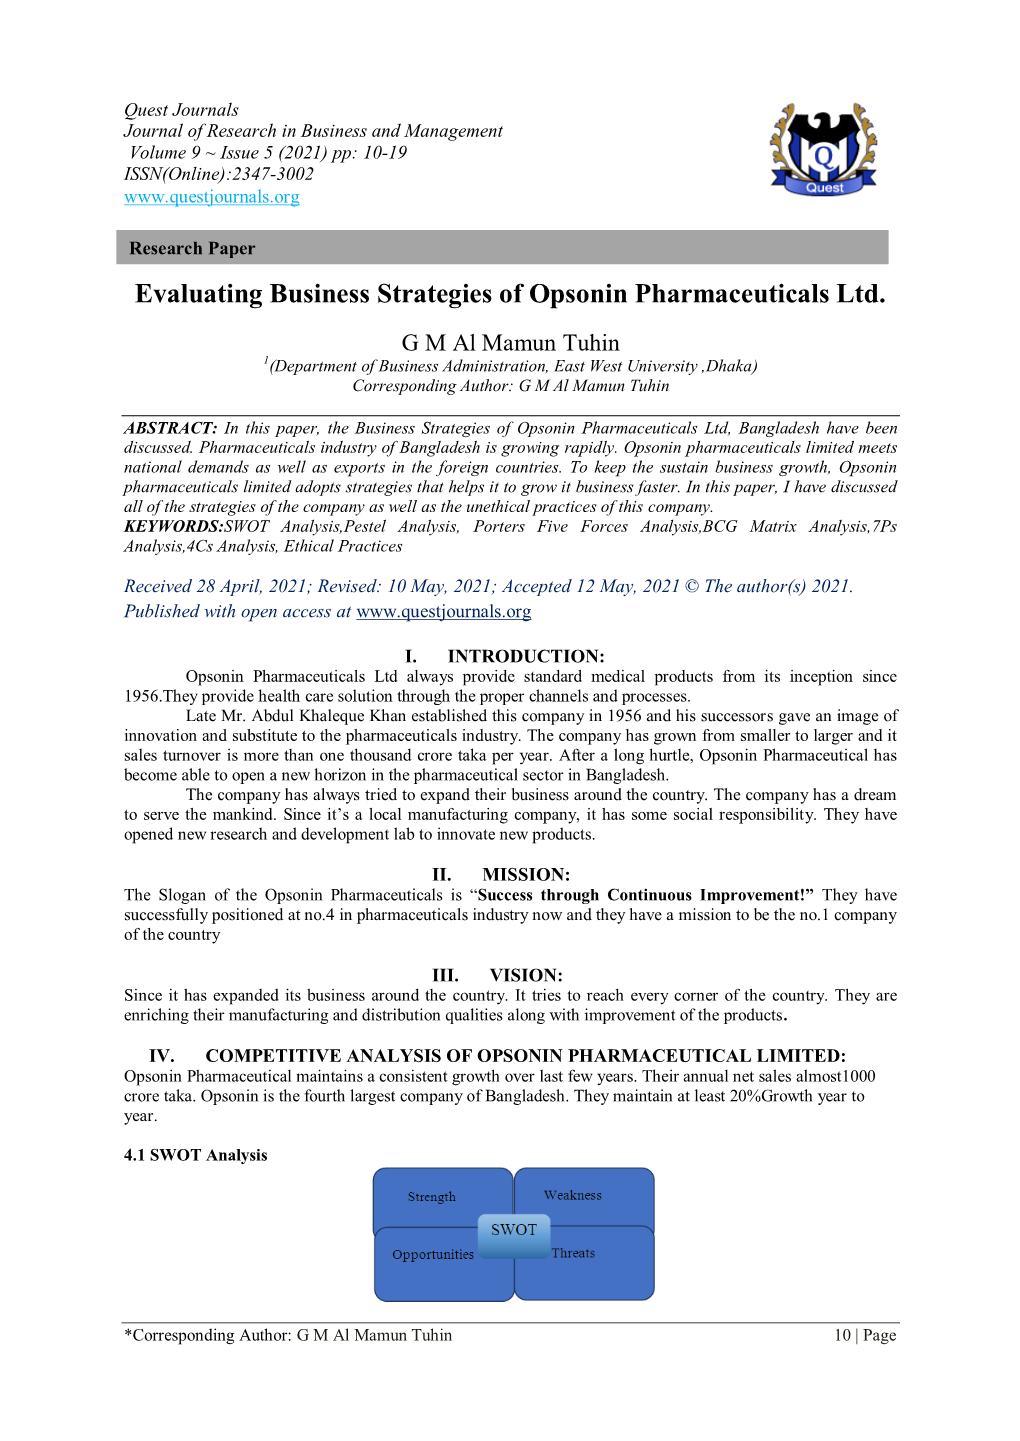 Evaluating Business Strategies of Opsonin Pharmaceuticals Ltd